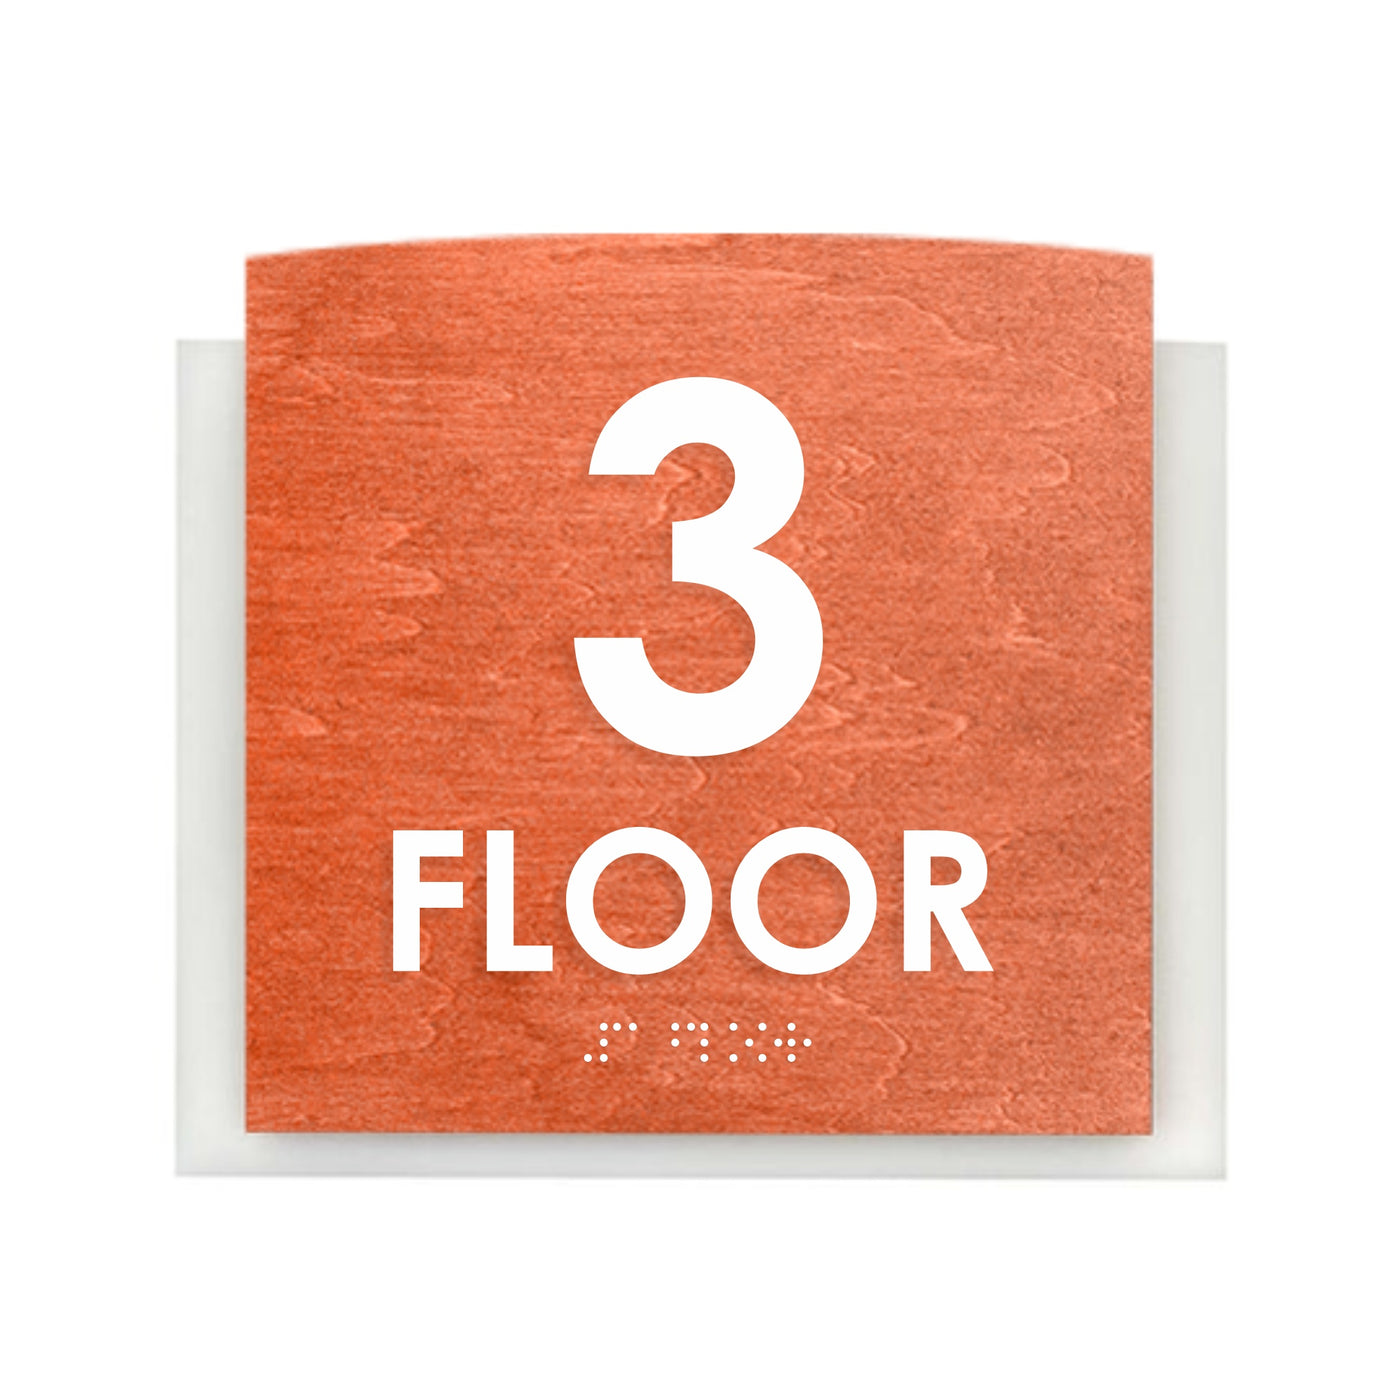 Floor Signs - 3rd Floor Sign "Scandza" Design